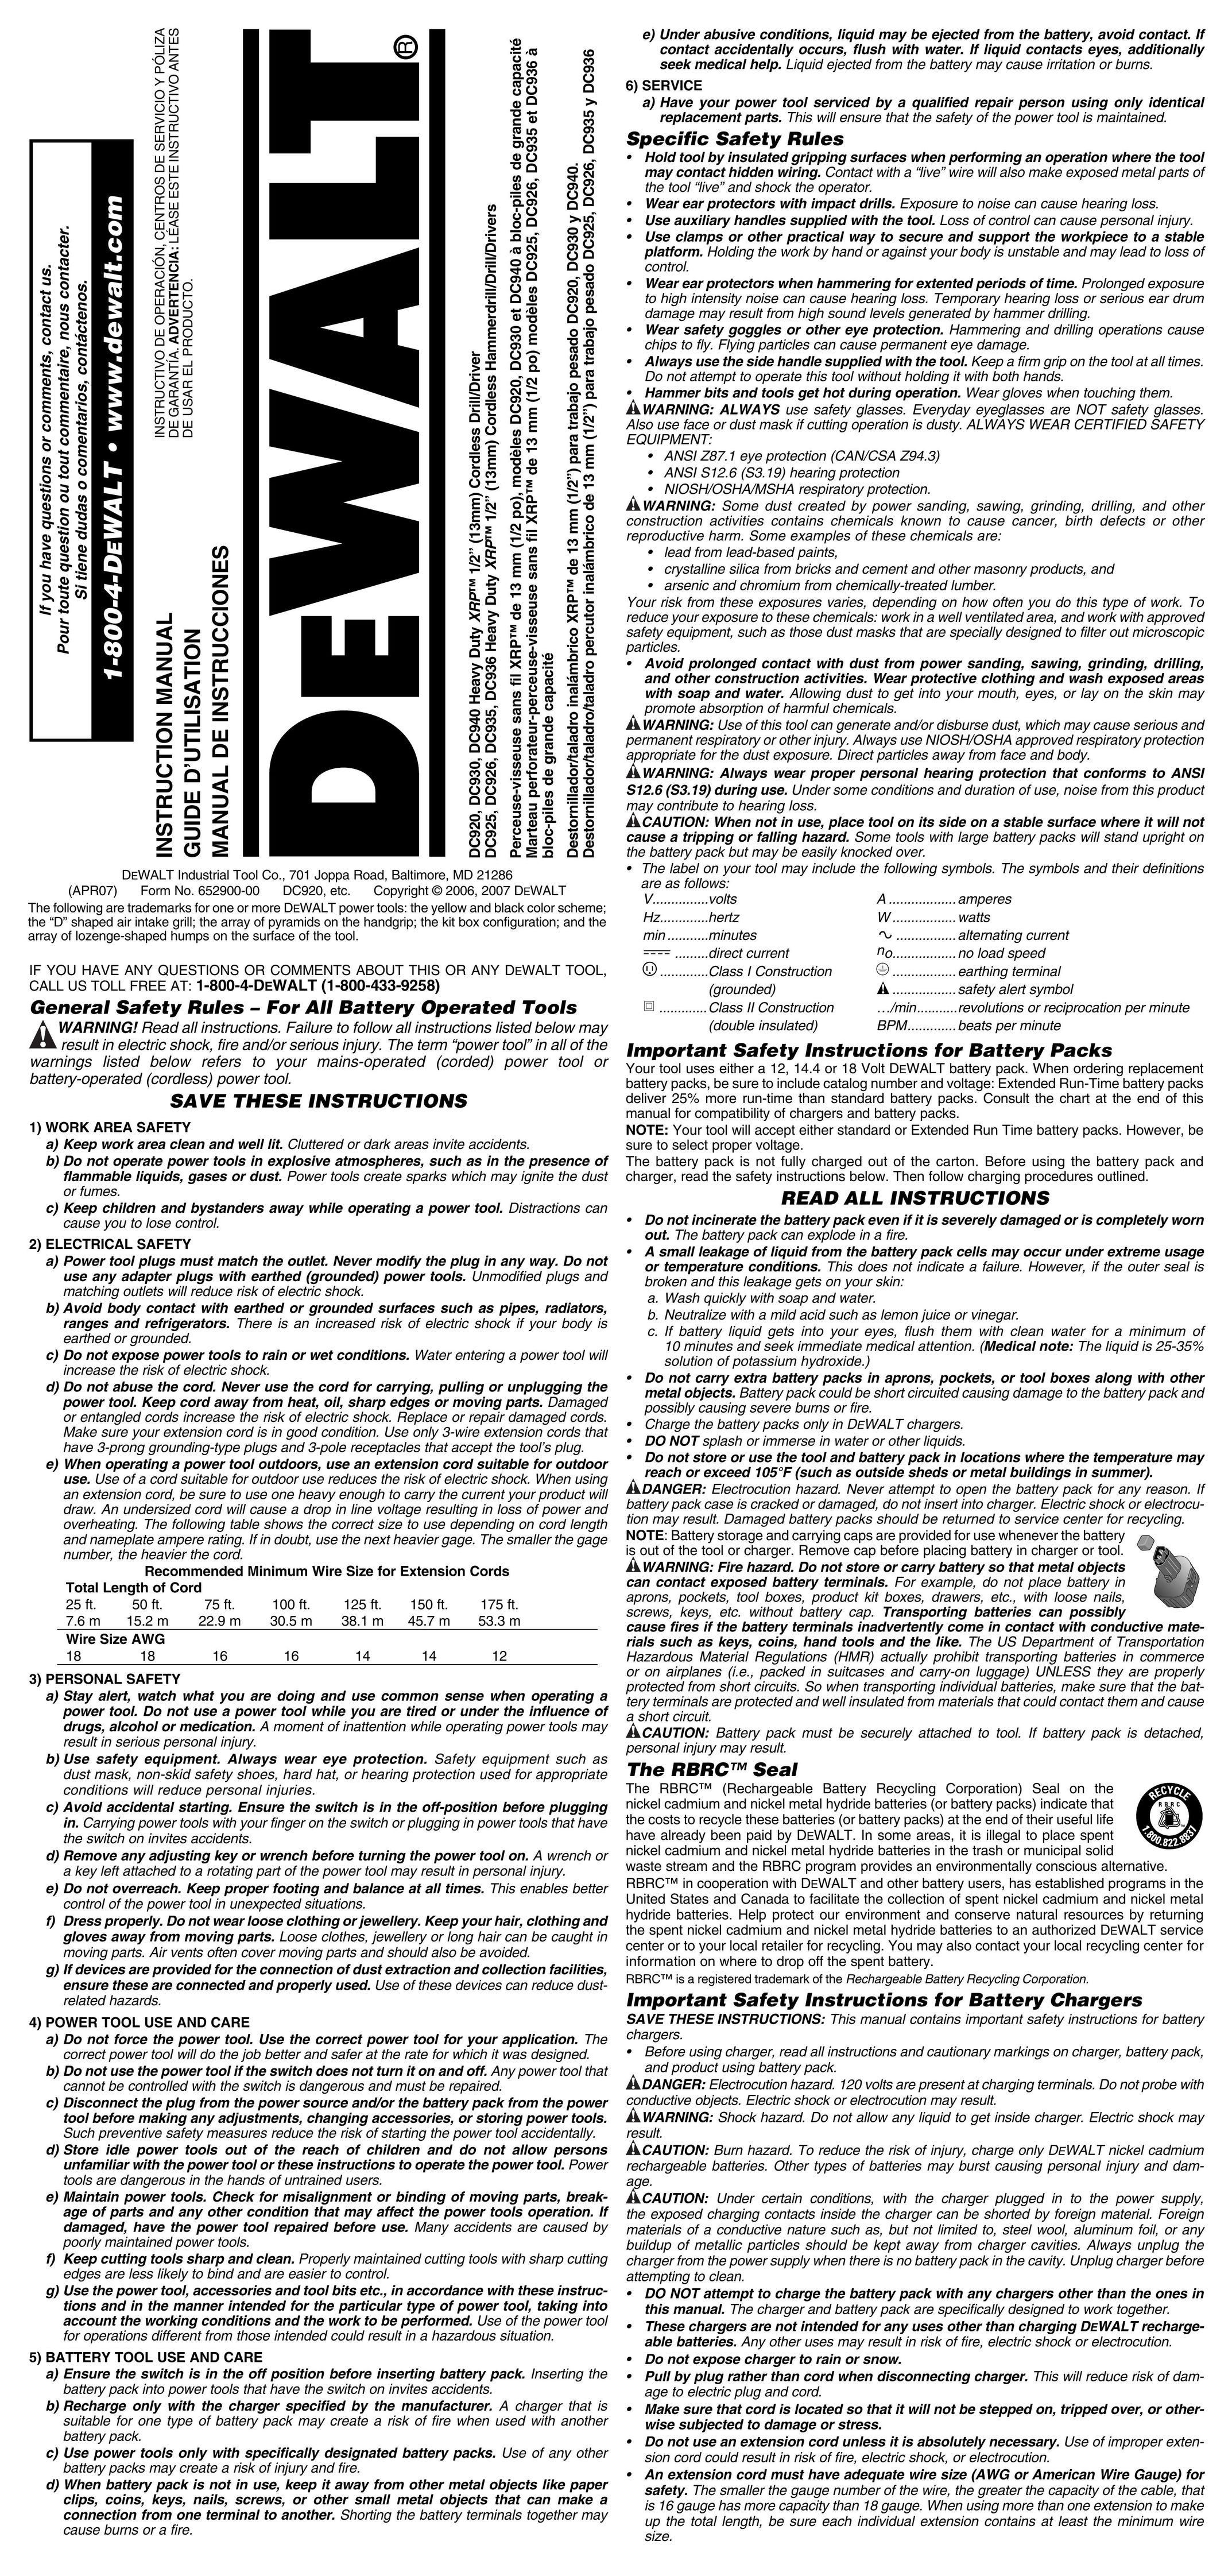 DeWalt DC935 Cordless Drill User Manual